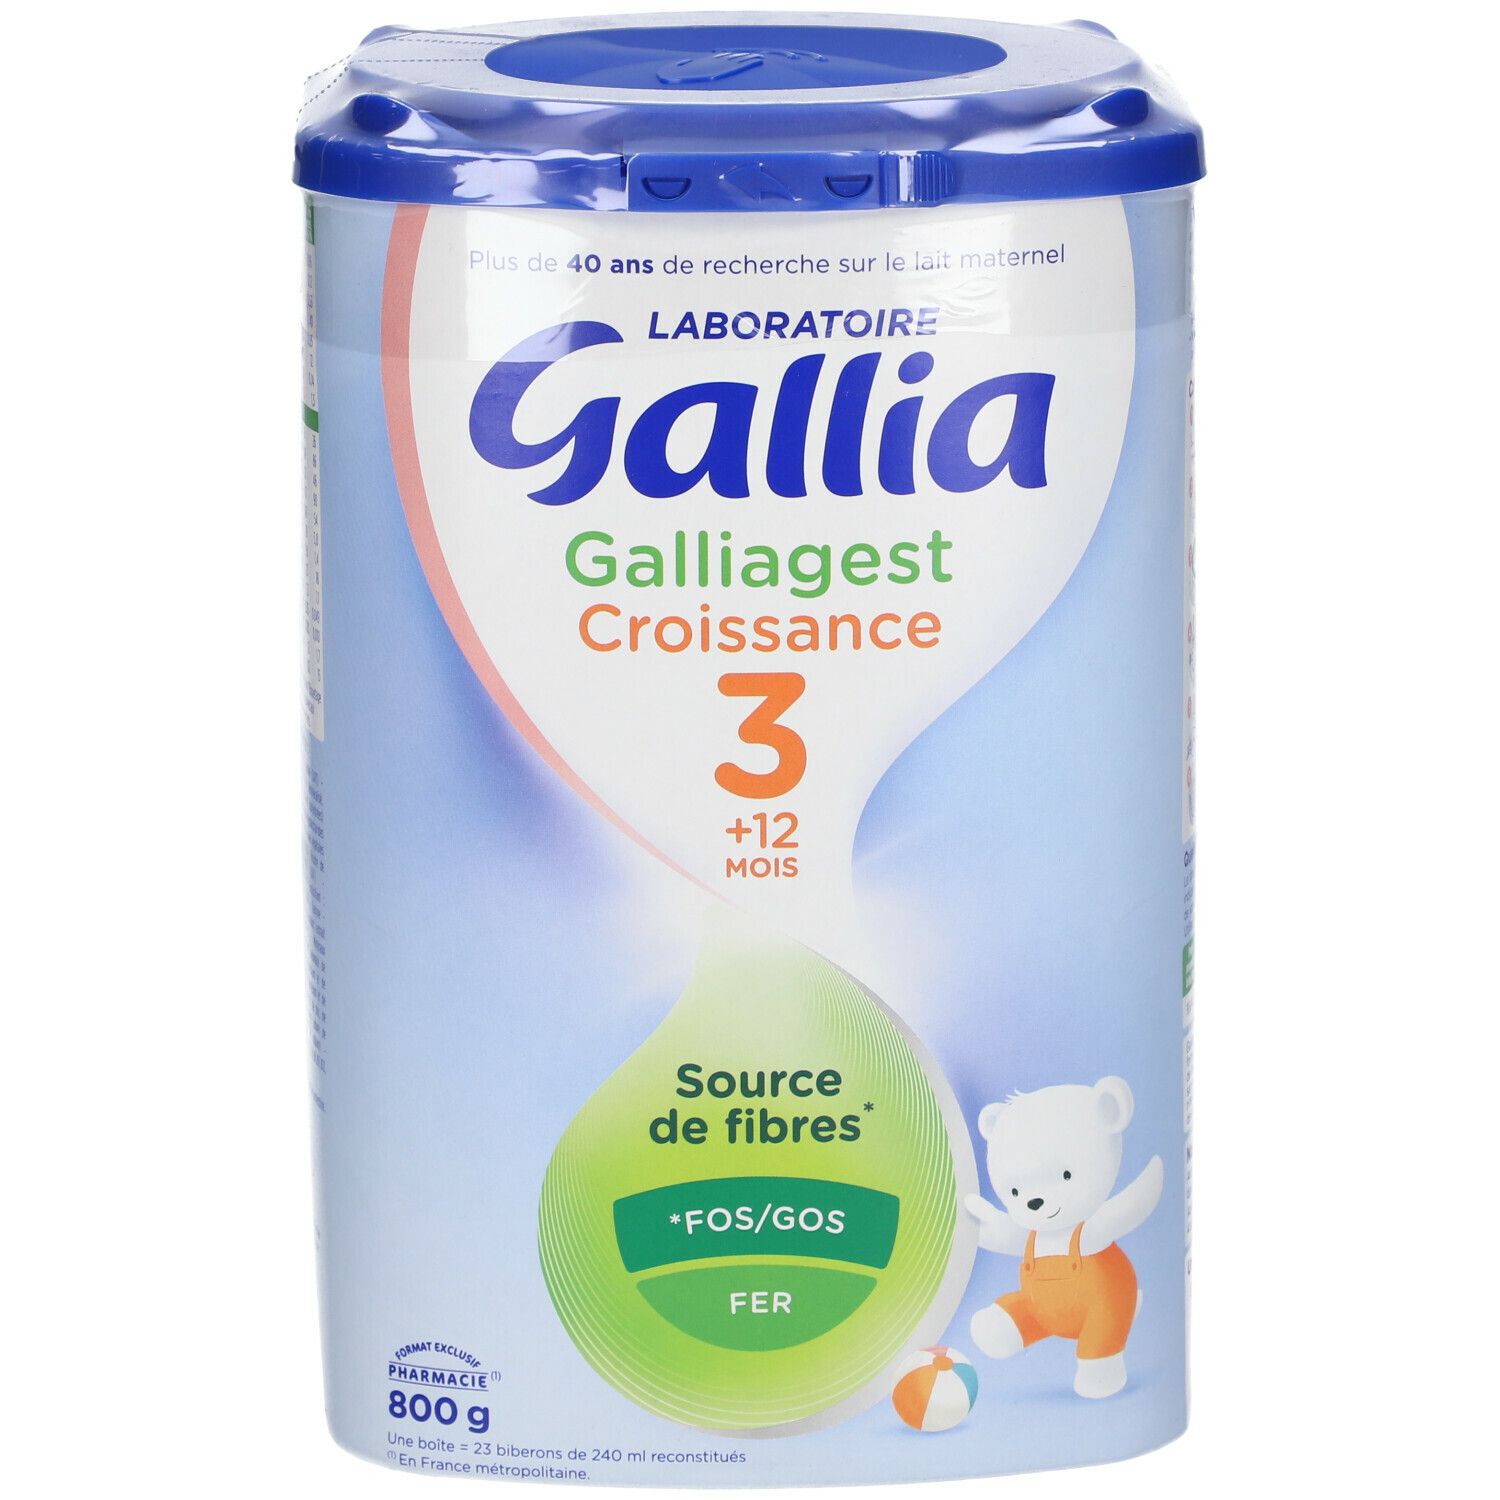 Gallia Galliagest Croissance 3